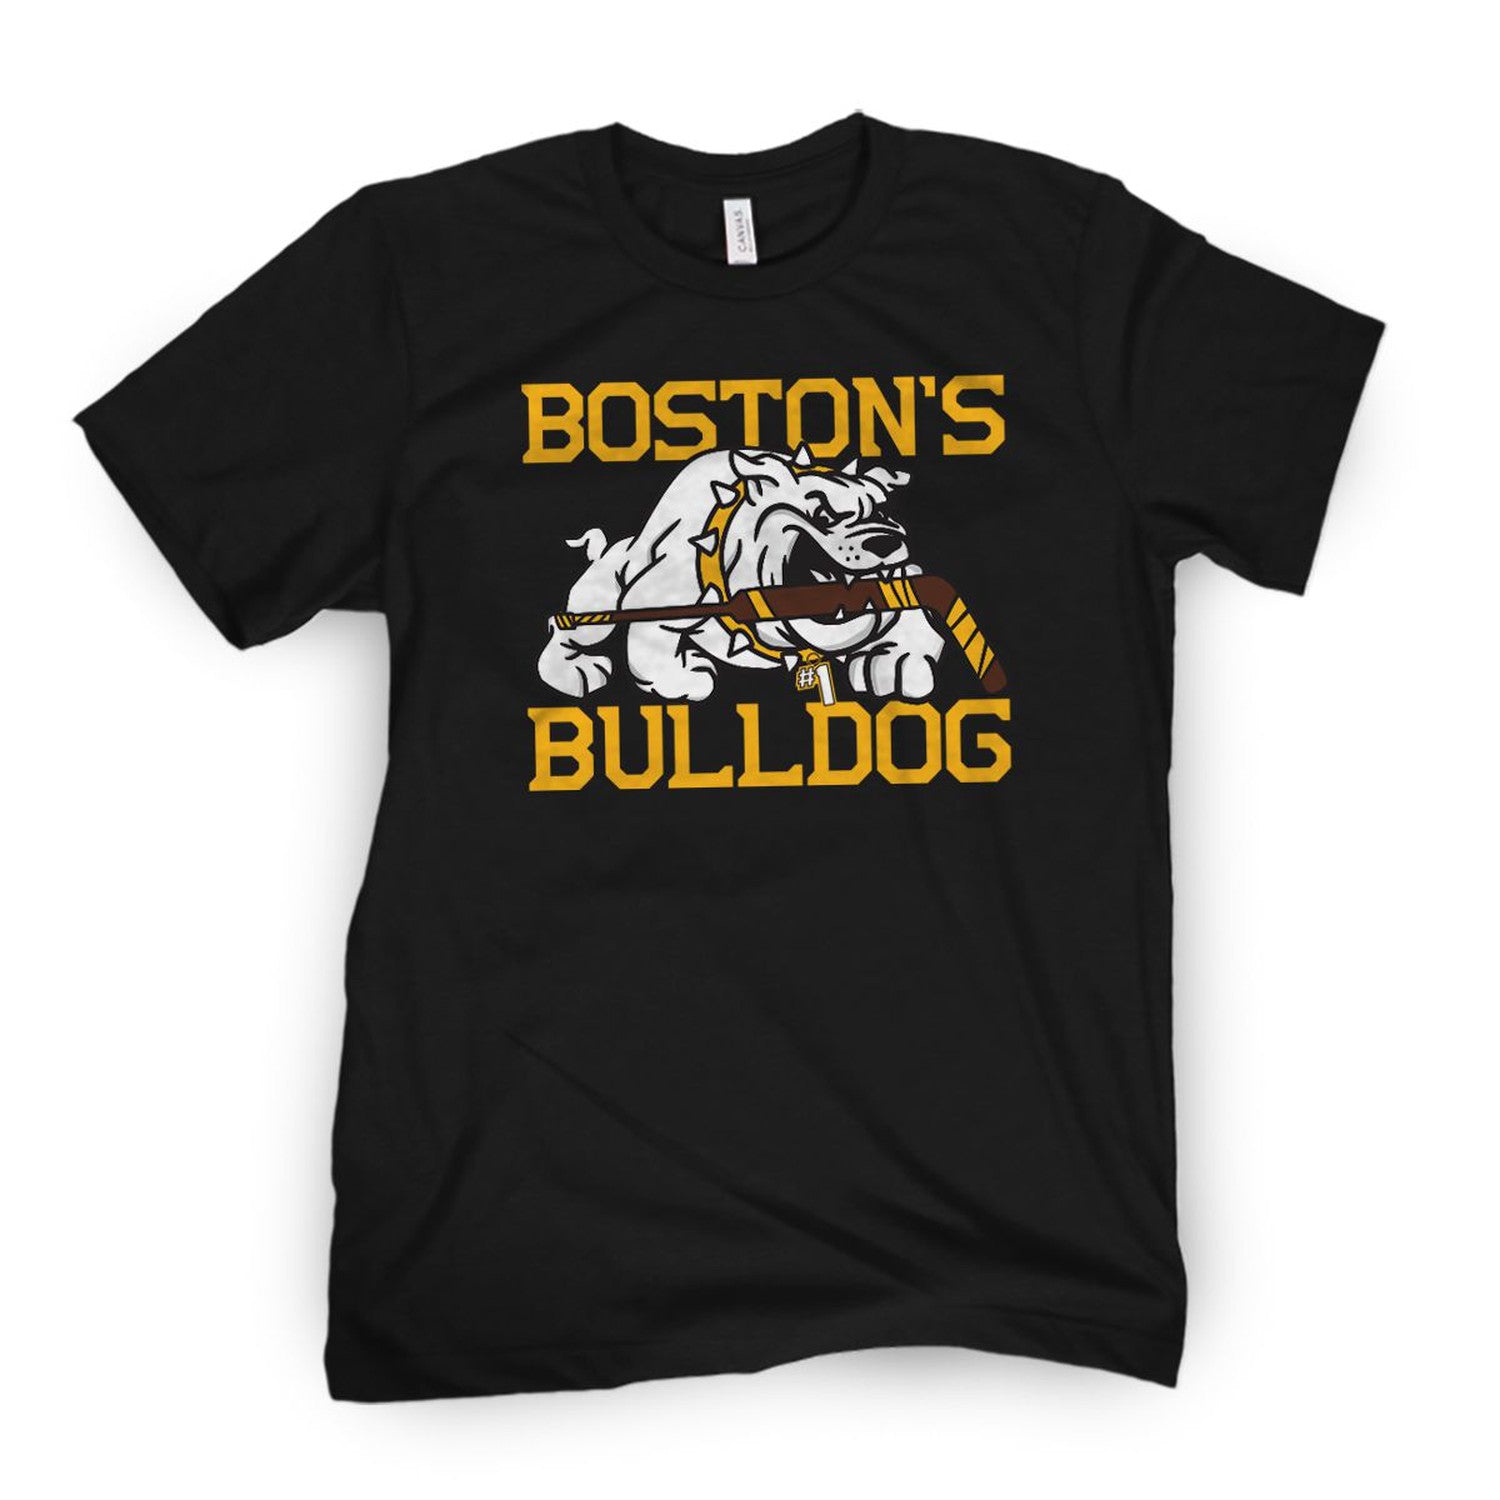 Boston's Bulldog Tee